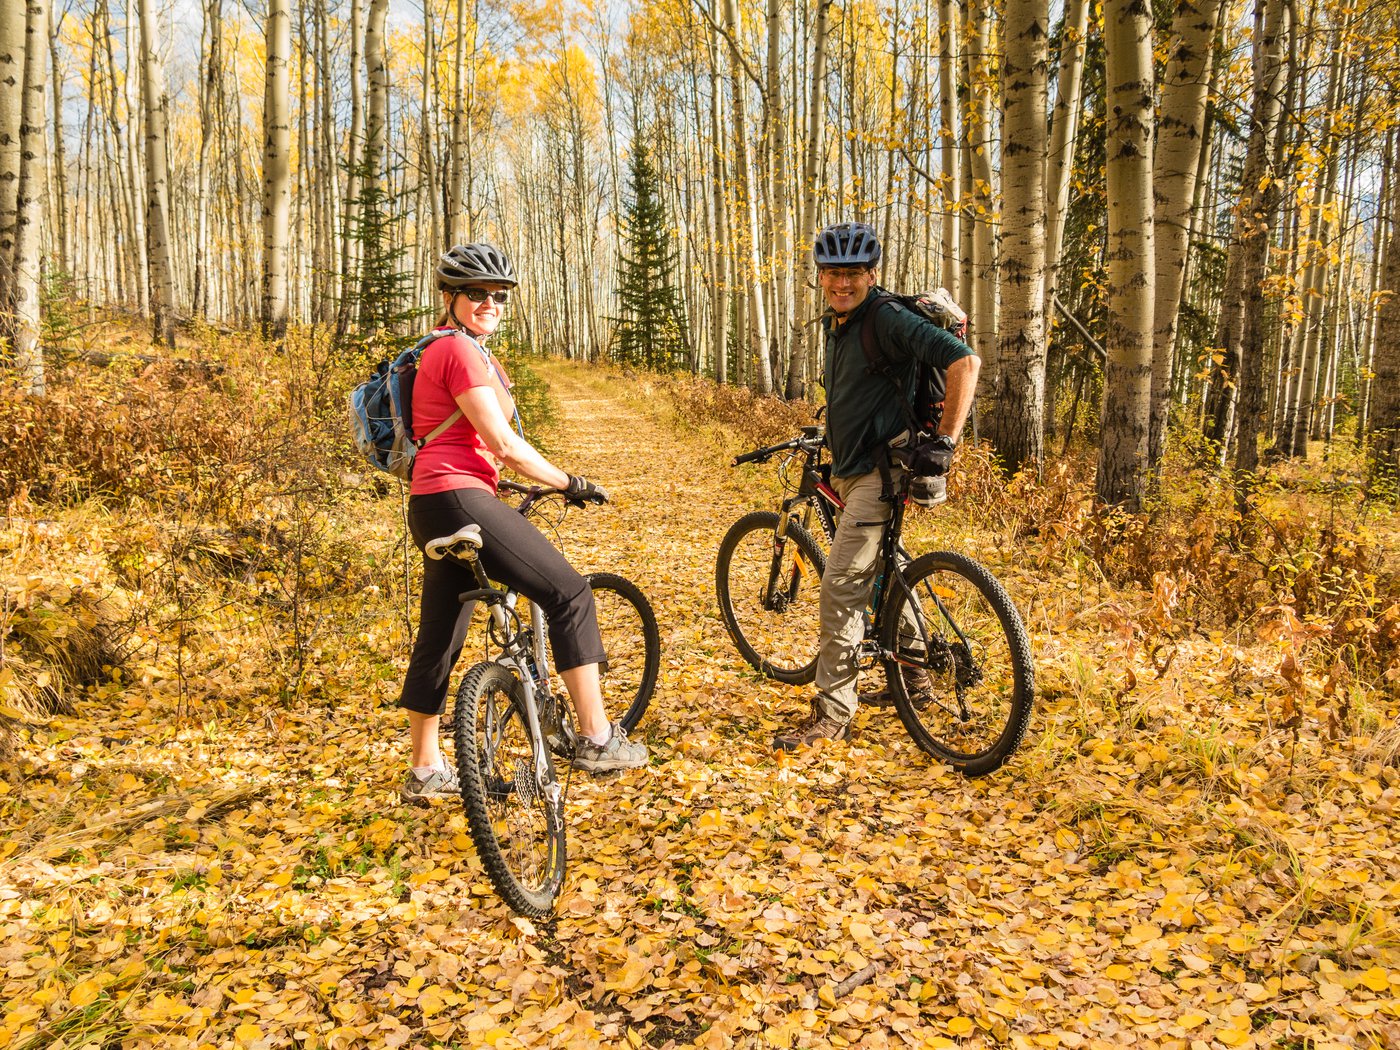 JasperNP-Mountain-Bikers-Fall-Credit-Parks-Canada-Rogier-Gruys.jpg